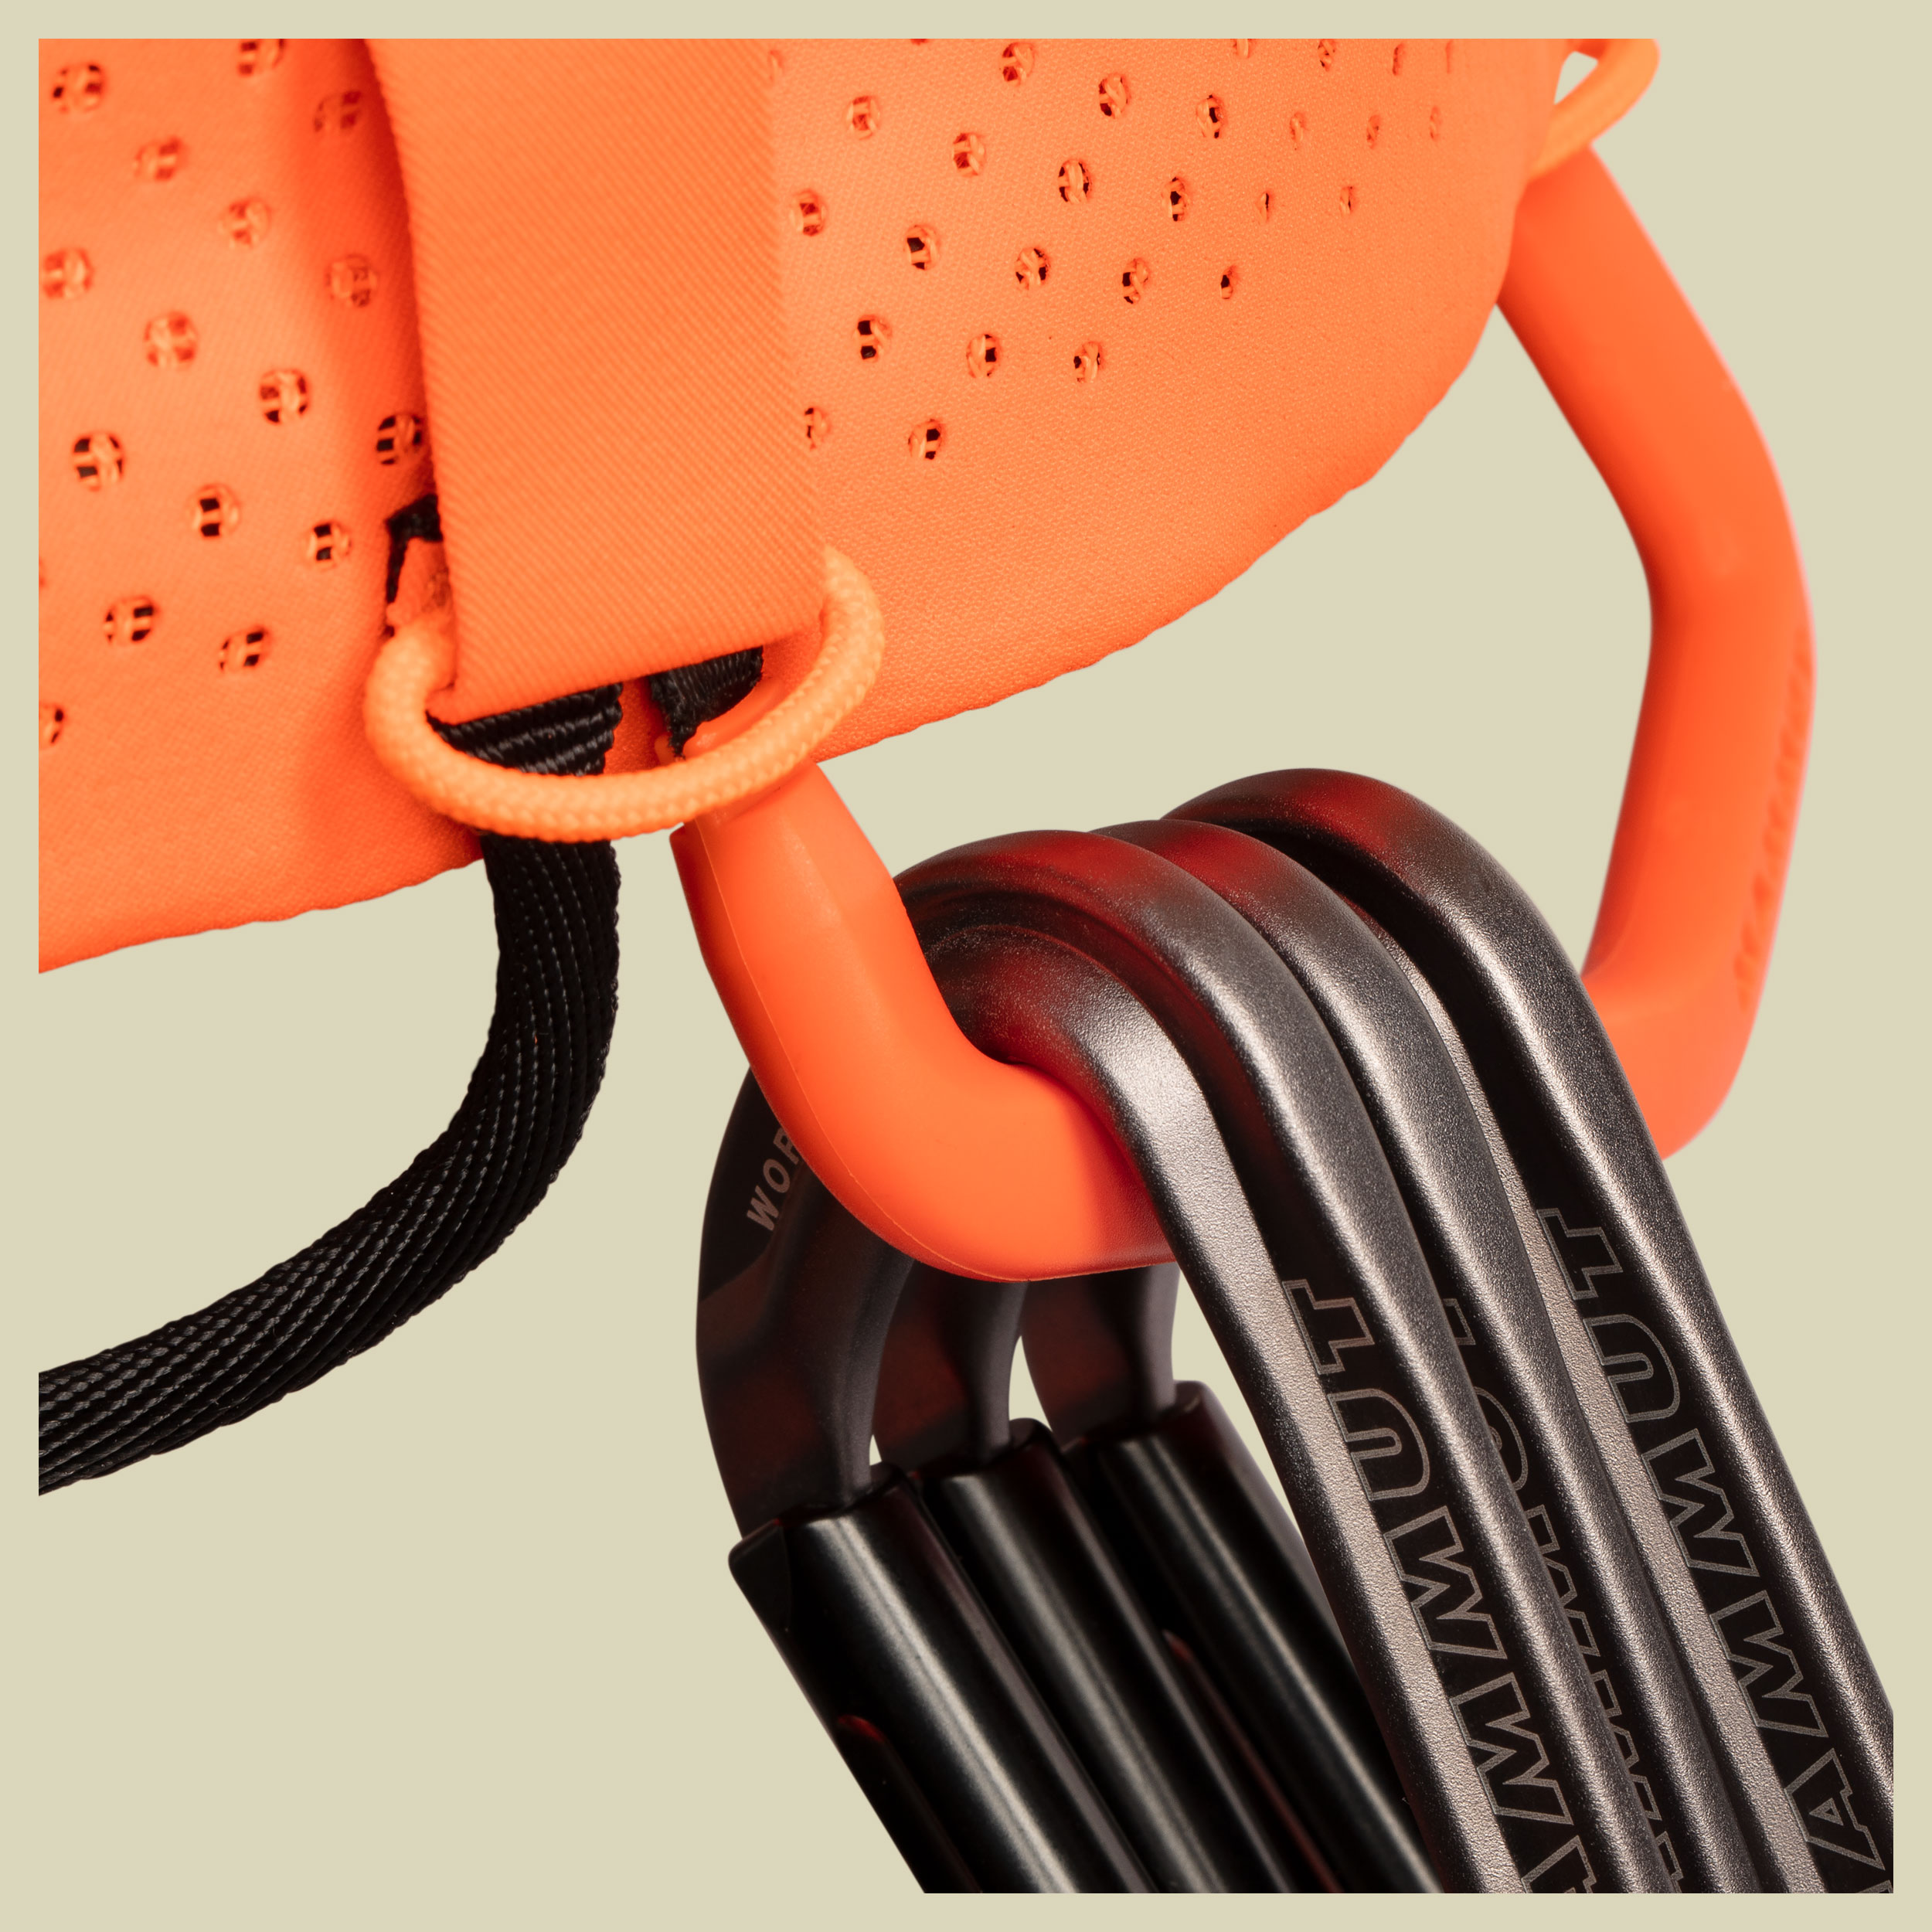 Sender Harness Länge S Farbe safety orange